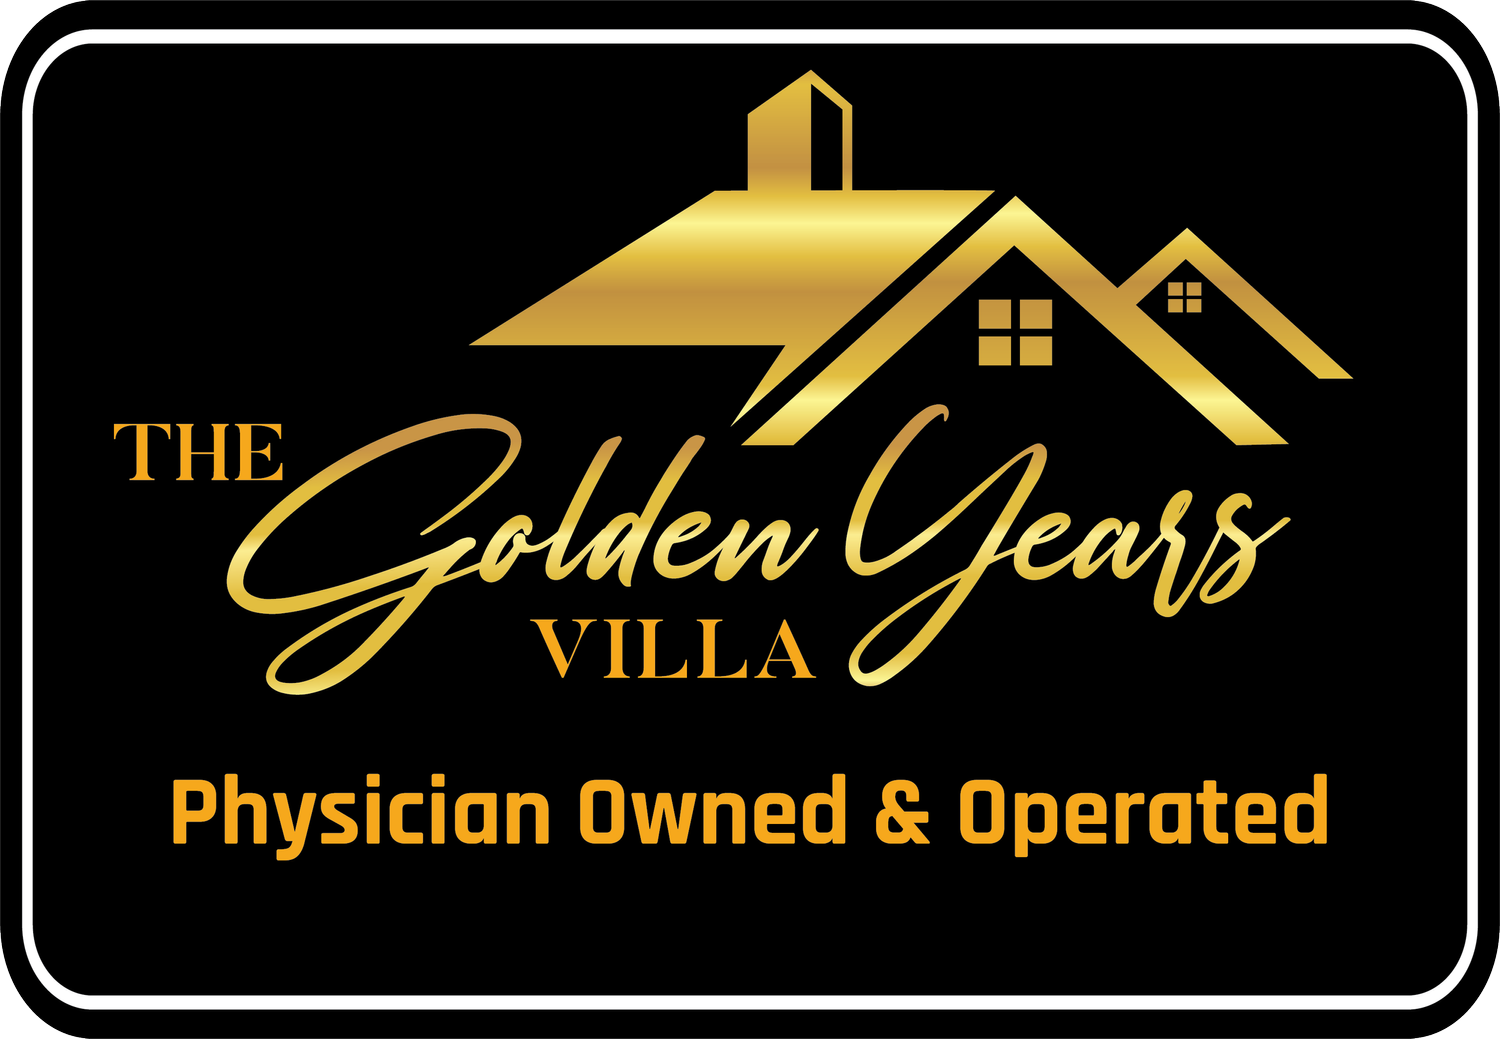 The Golden Years Villa LLC